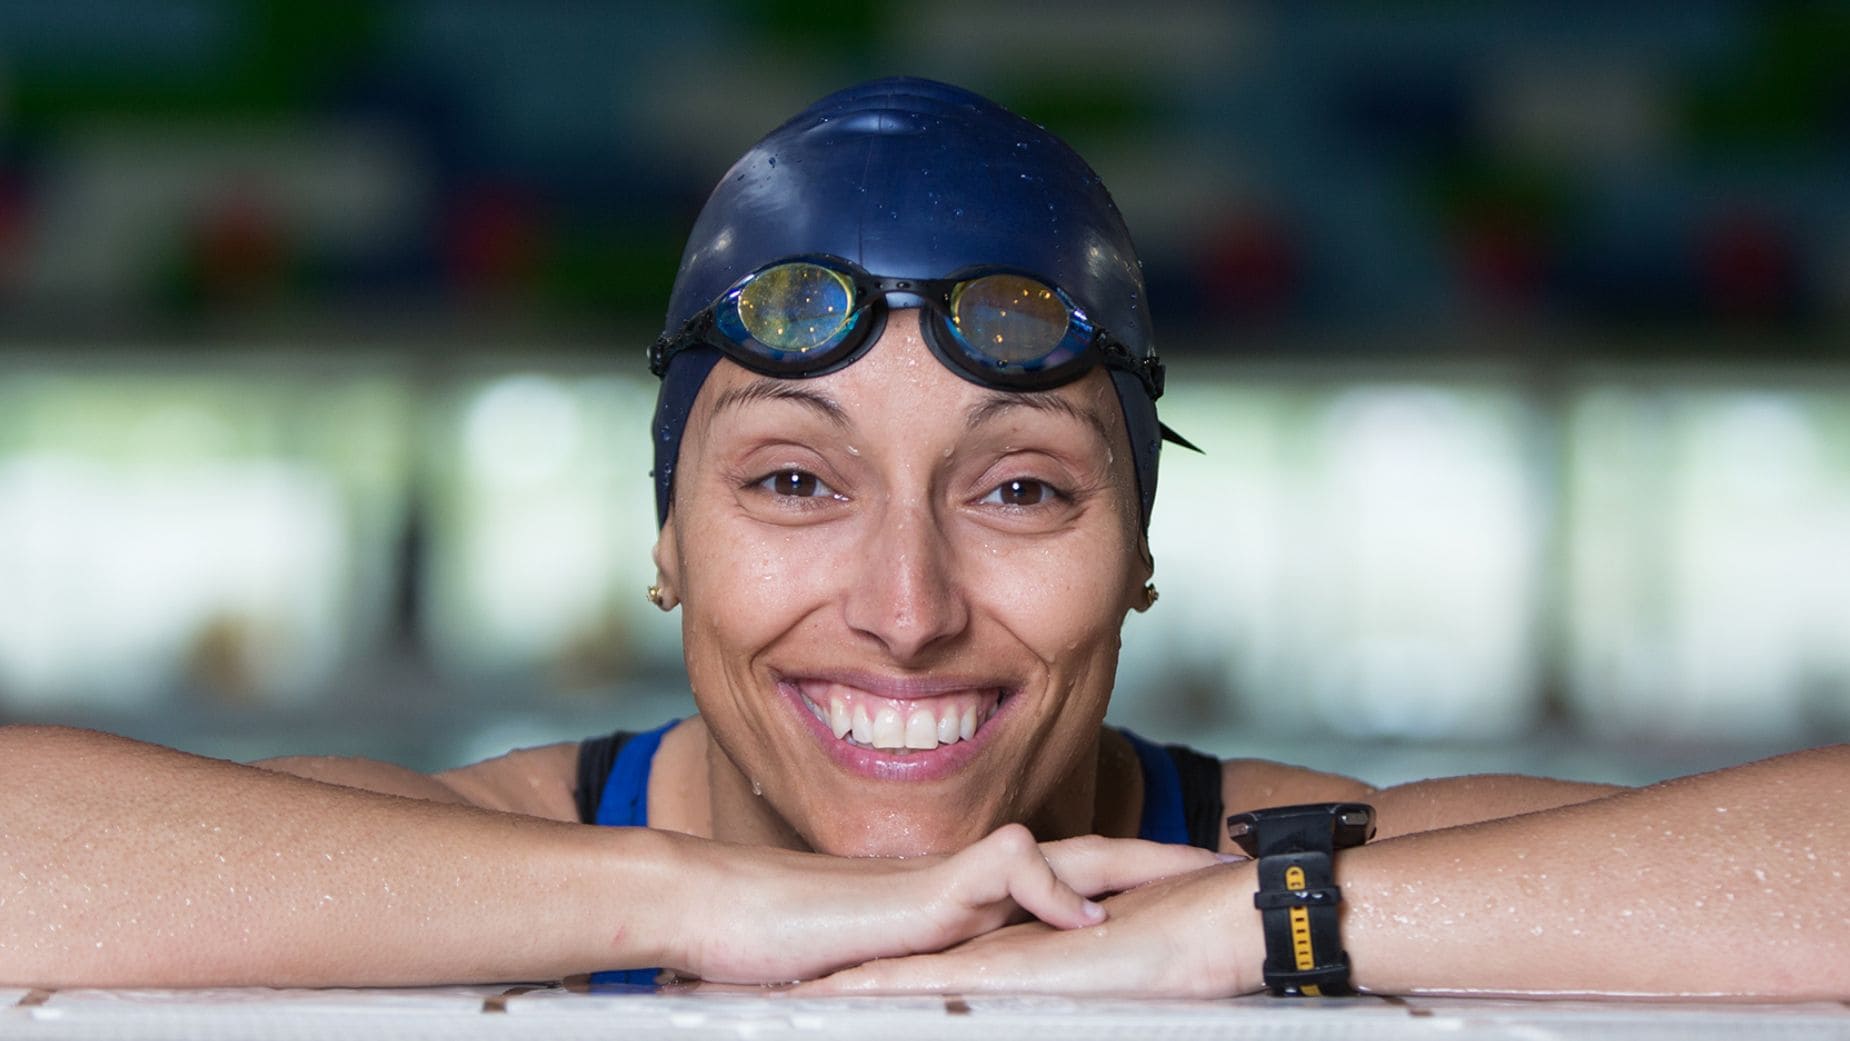 La nadadora paralímpica Teresa Perales ha sido nombrada Doctora Honoris Causa de la UNED